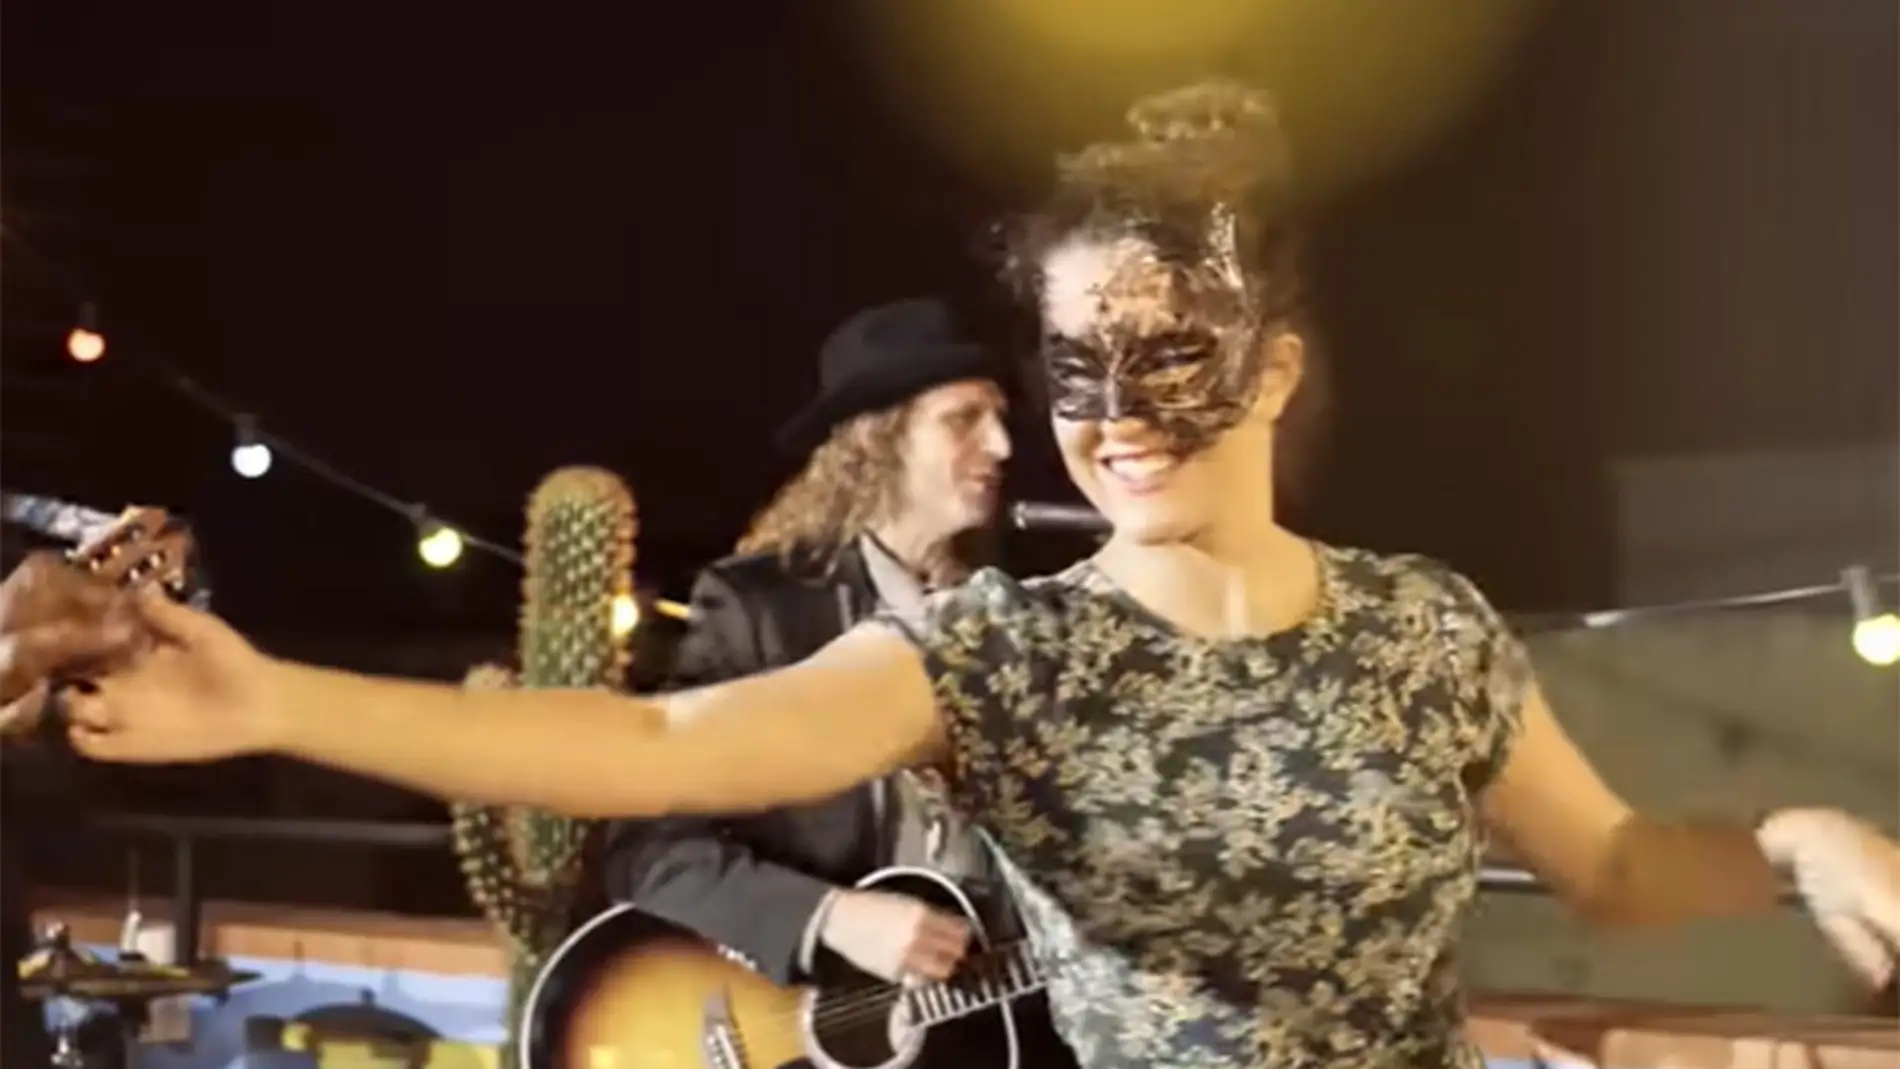 Sara Donés, la hija de Pau Donés protagonista del videoclip de 'Eso que tú me das'